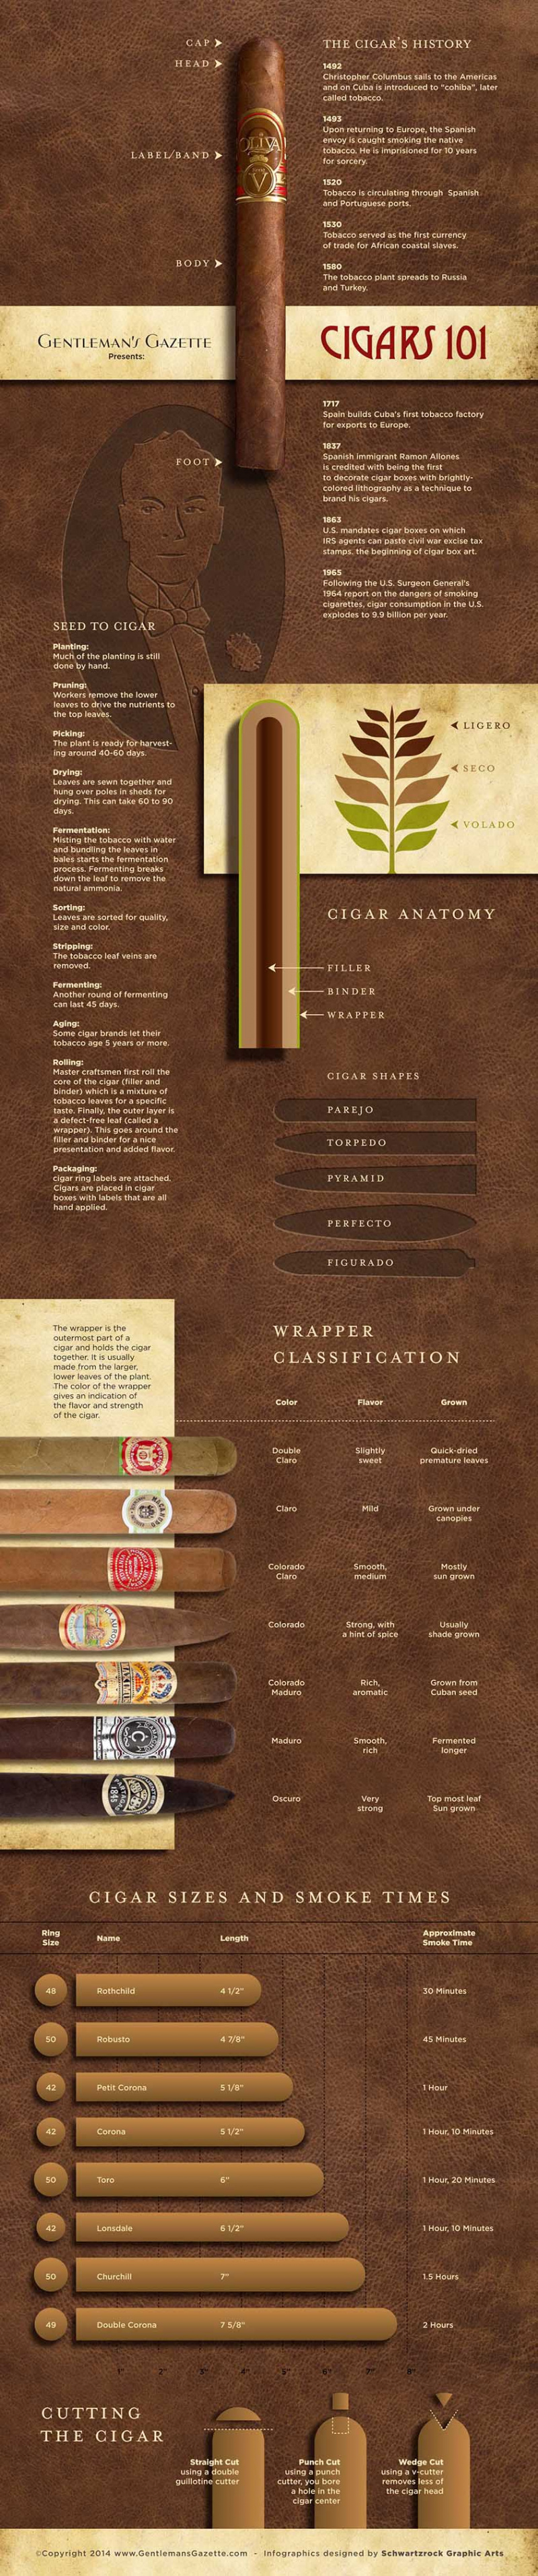 Cigares 101 Infographie par Gentleman